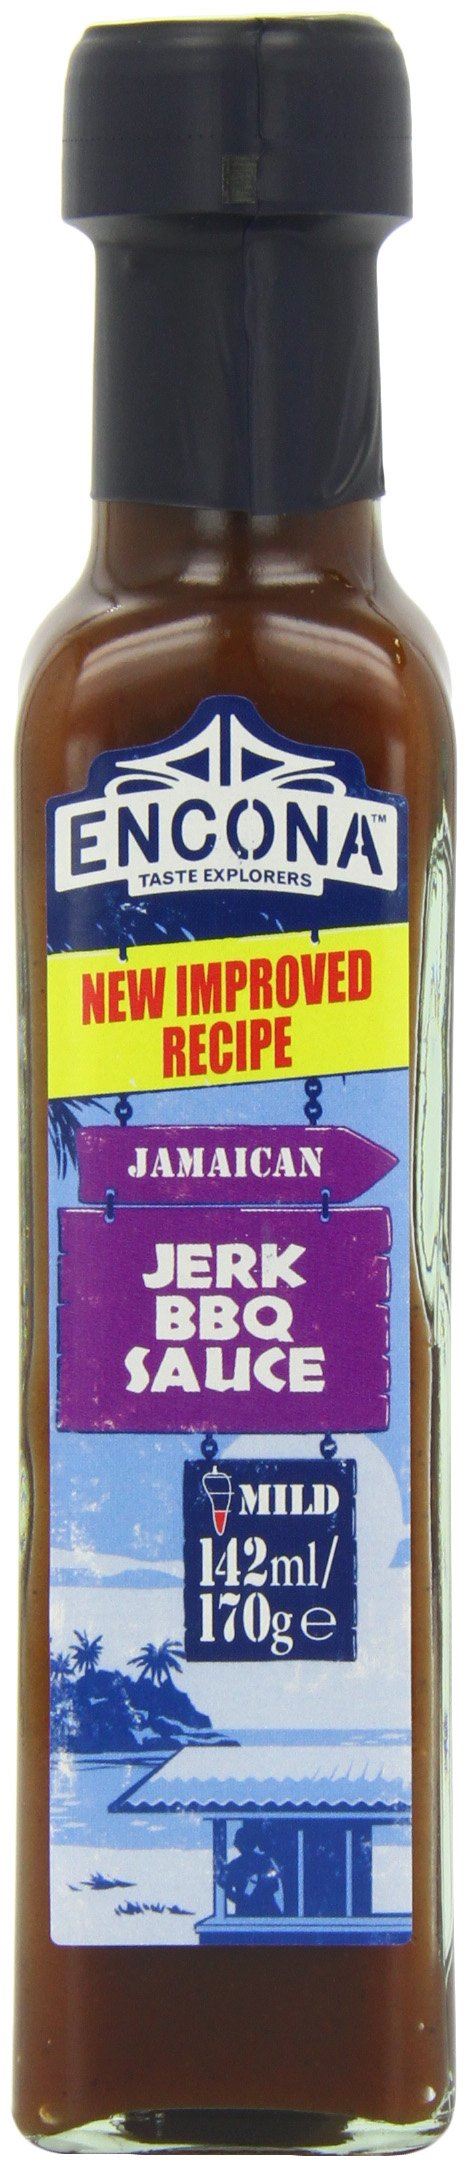 Encona Jamaican Jerk BBQ Sauce 6x142ml